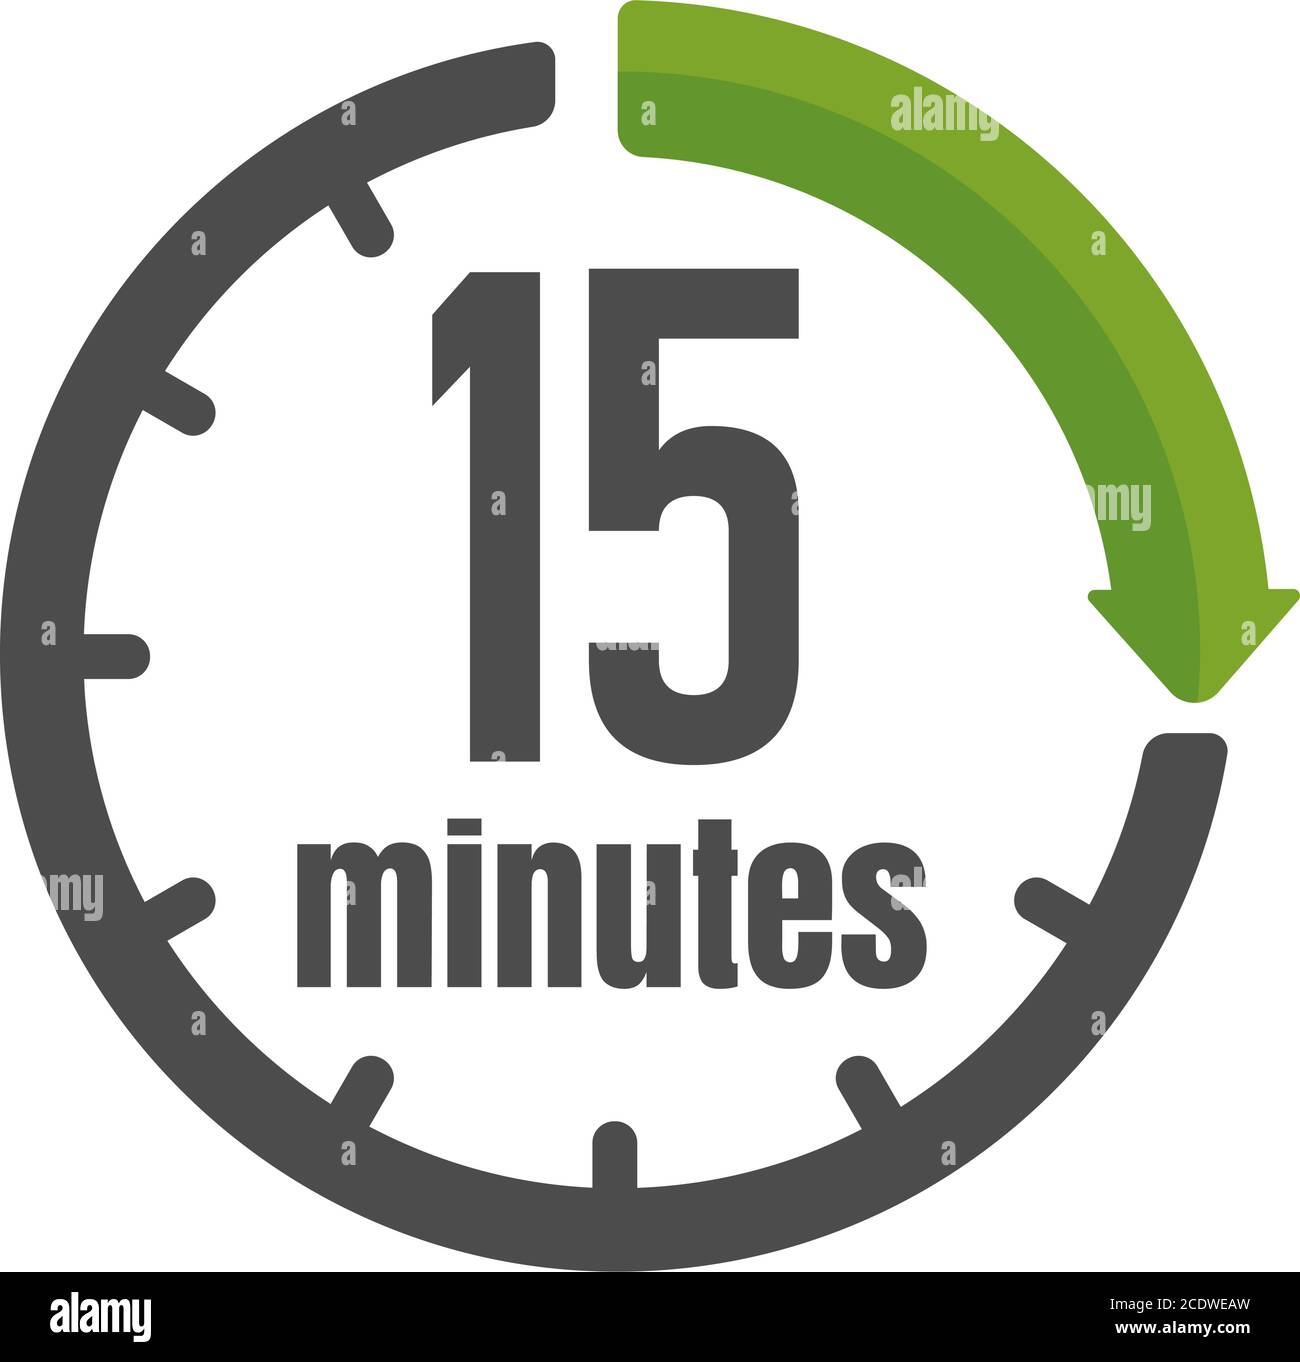 Timer 15 minutes vector illustration Banque d'images vectorielles - Alamy